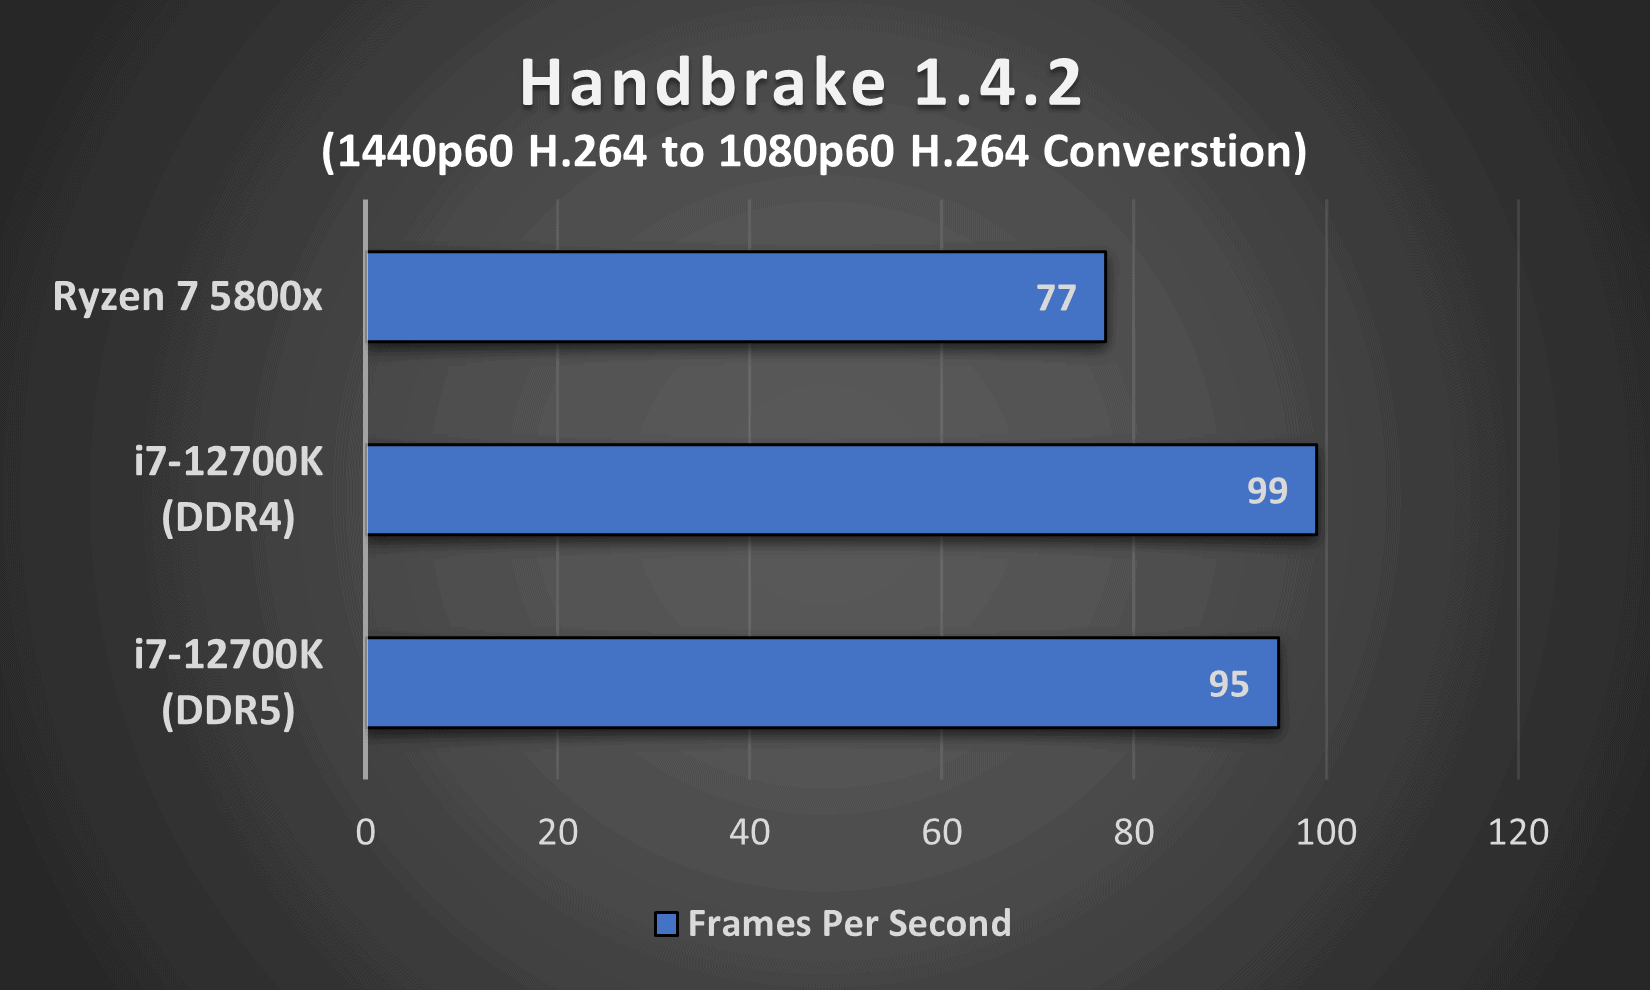 Handbrake 1.4.2 performance comparison between Intel's i7 12700K (DDR4 and DDR5) and AMD's Ryzen 7 5800x